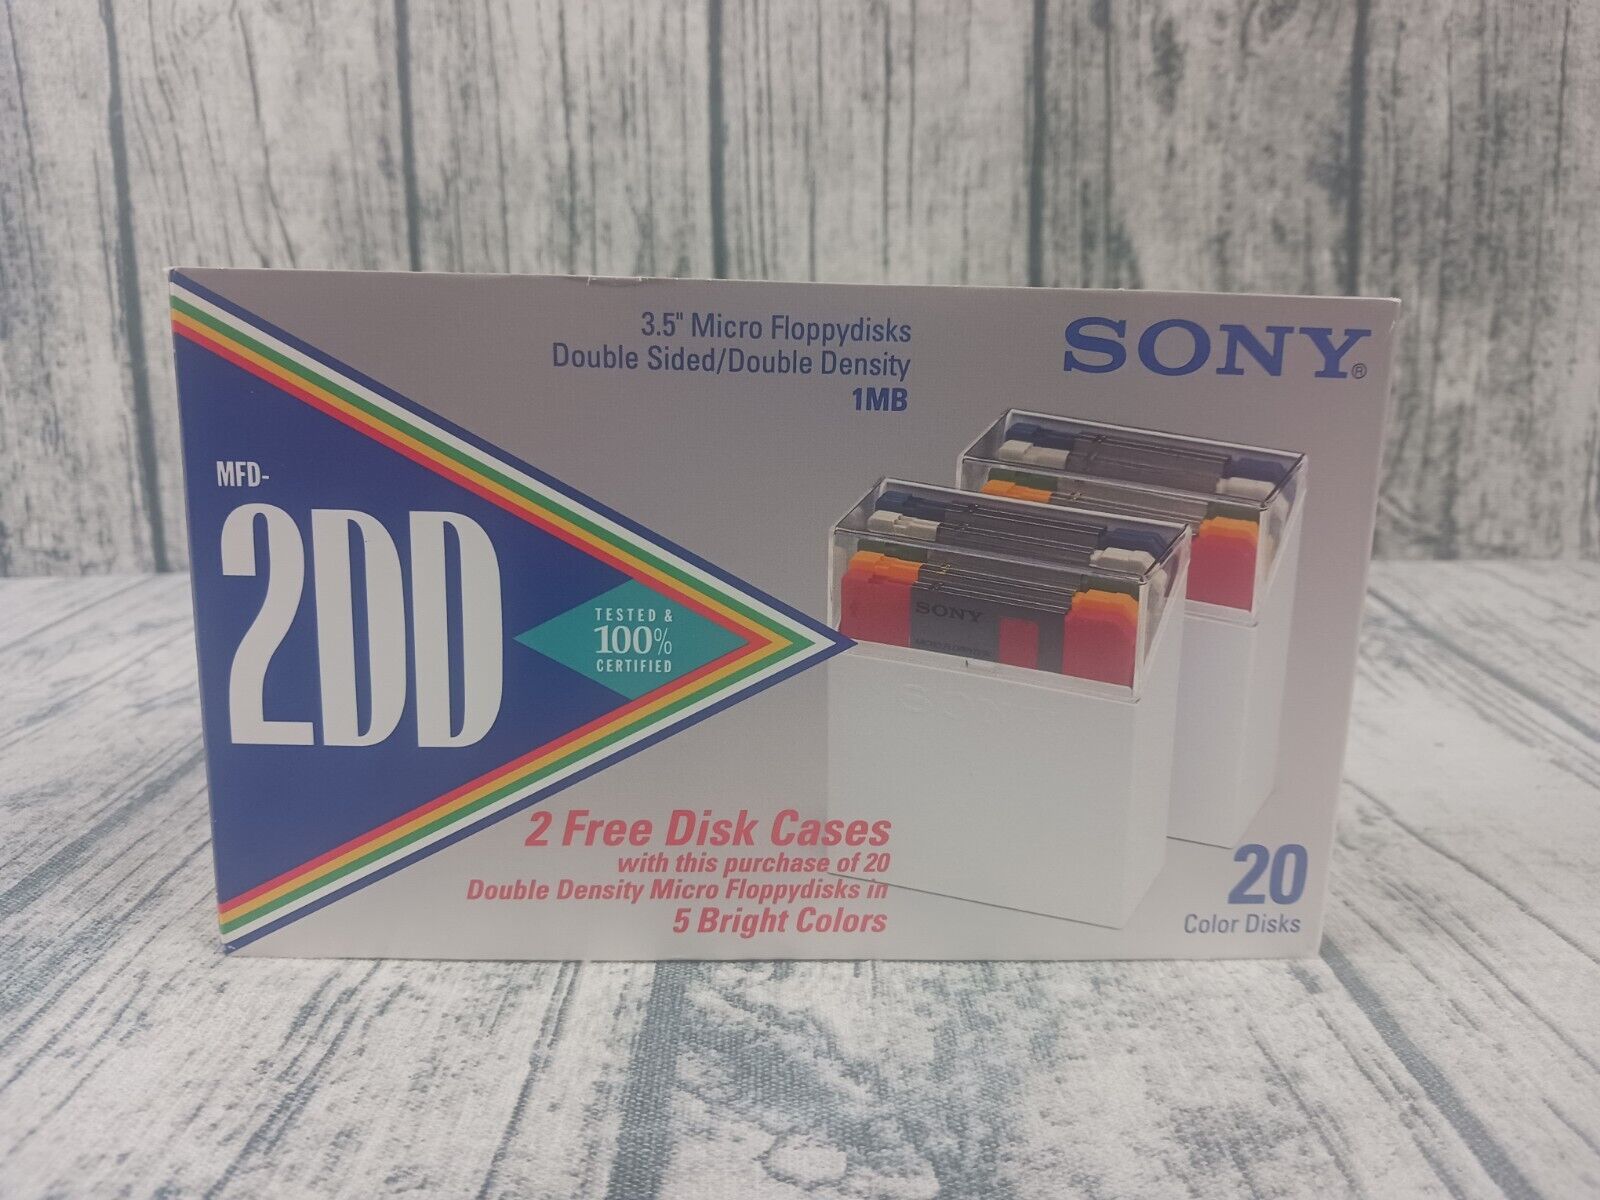 Sony 2HD 2DD Floppy Diskettes IBM Apple Mac Formatted (16) Disks - Open Box 